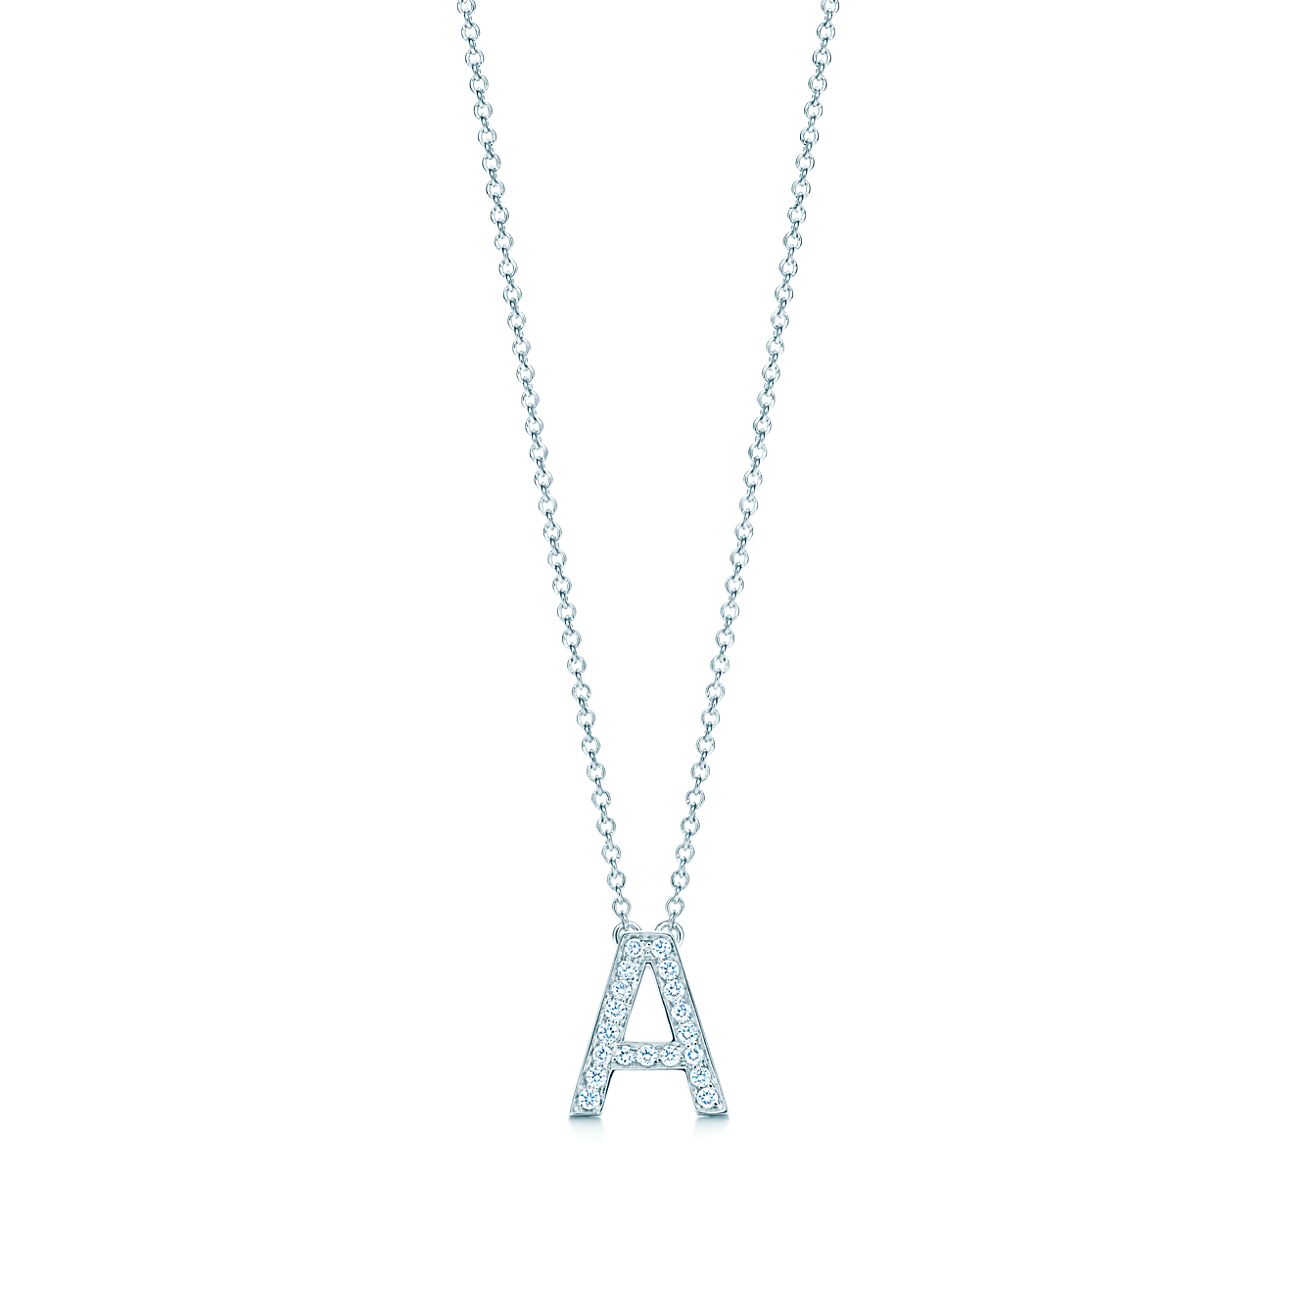 Tiffany Letters pendant of diamonds in 